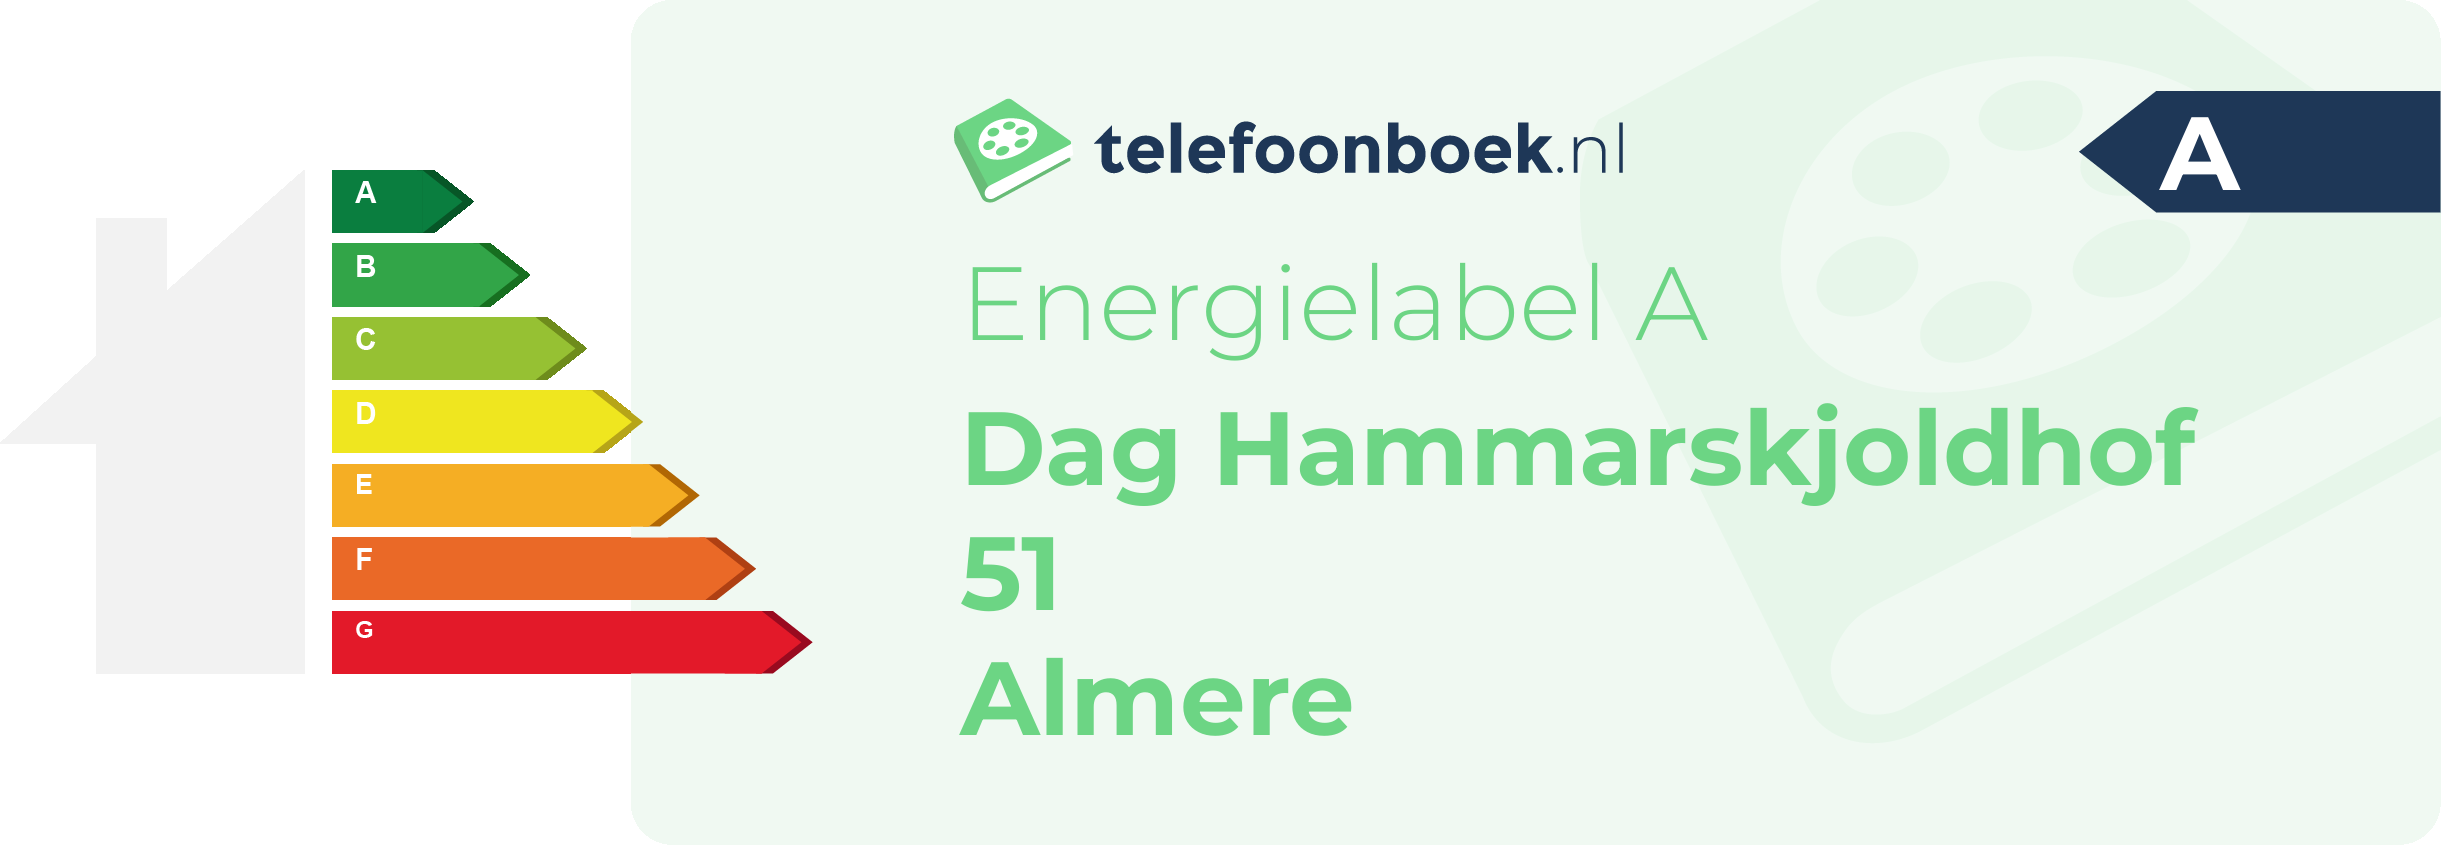 Energielabel Dag Hammarskjoldhof 51 Almere